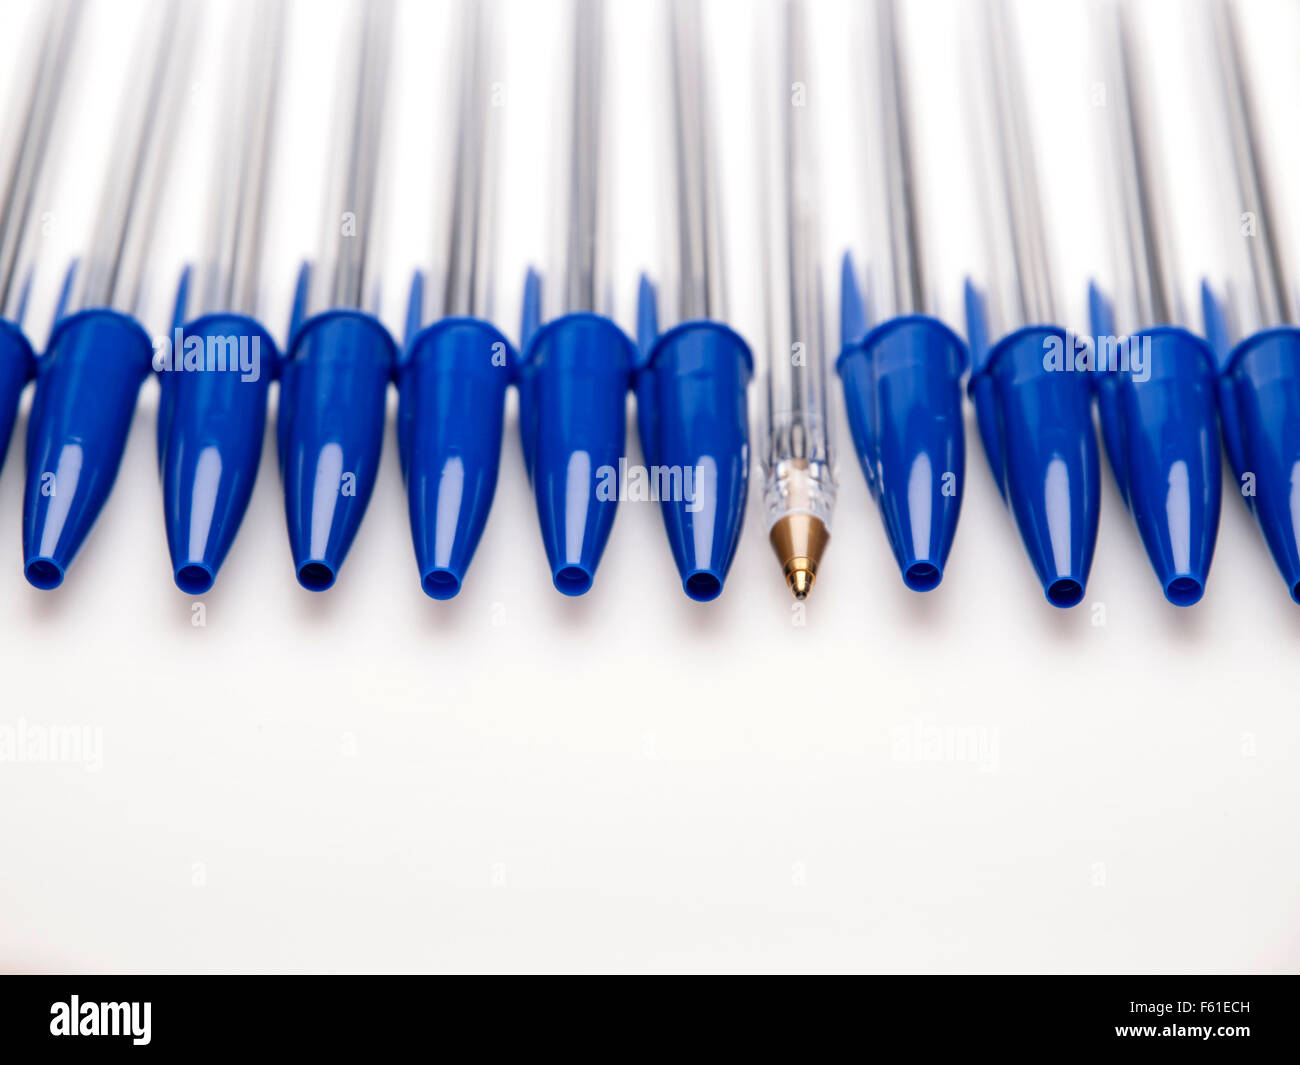 Bolígrafos bic cristal azul Foto de stock